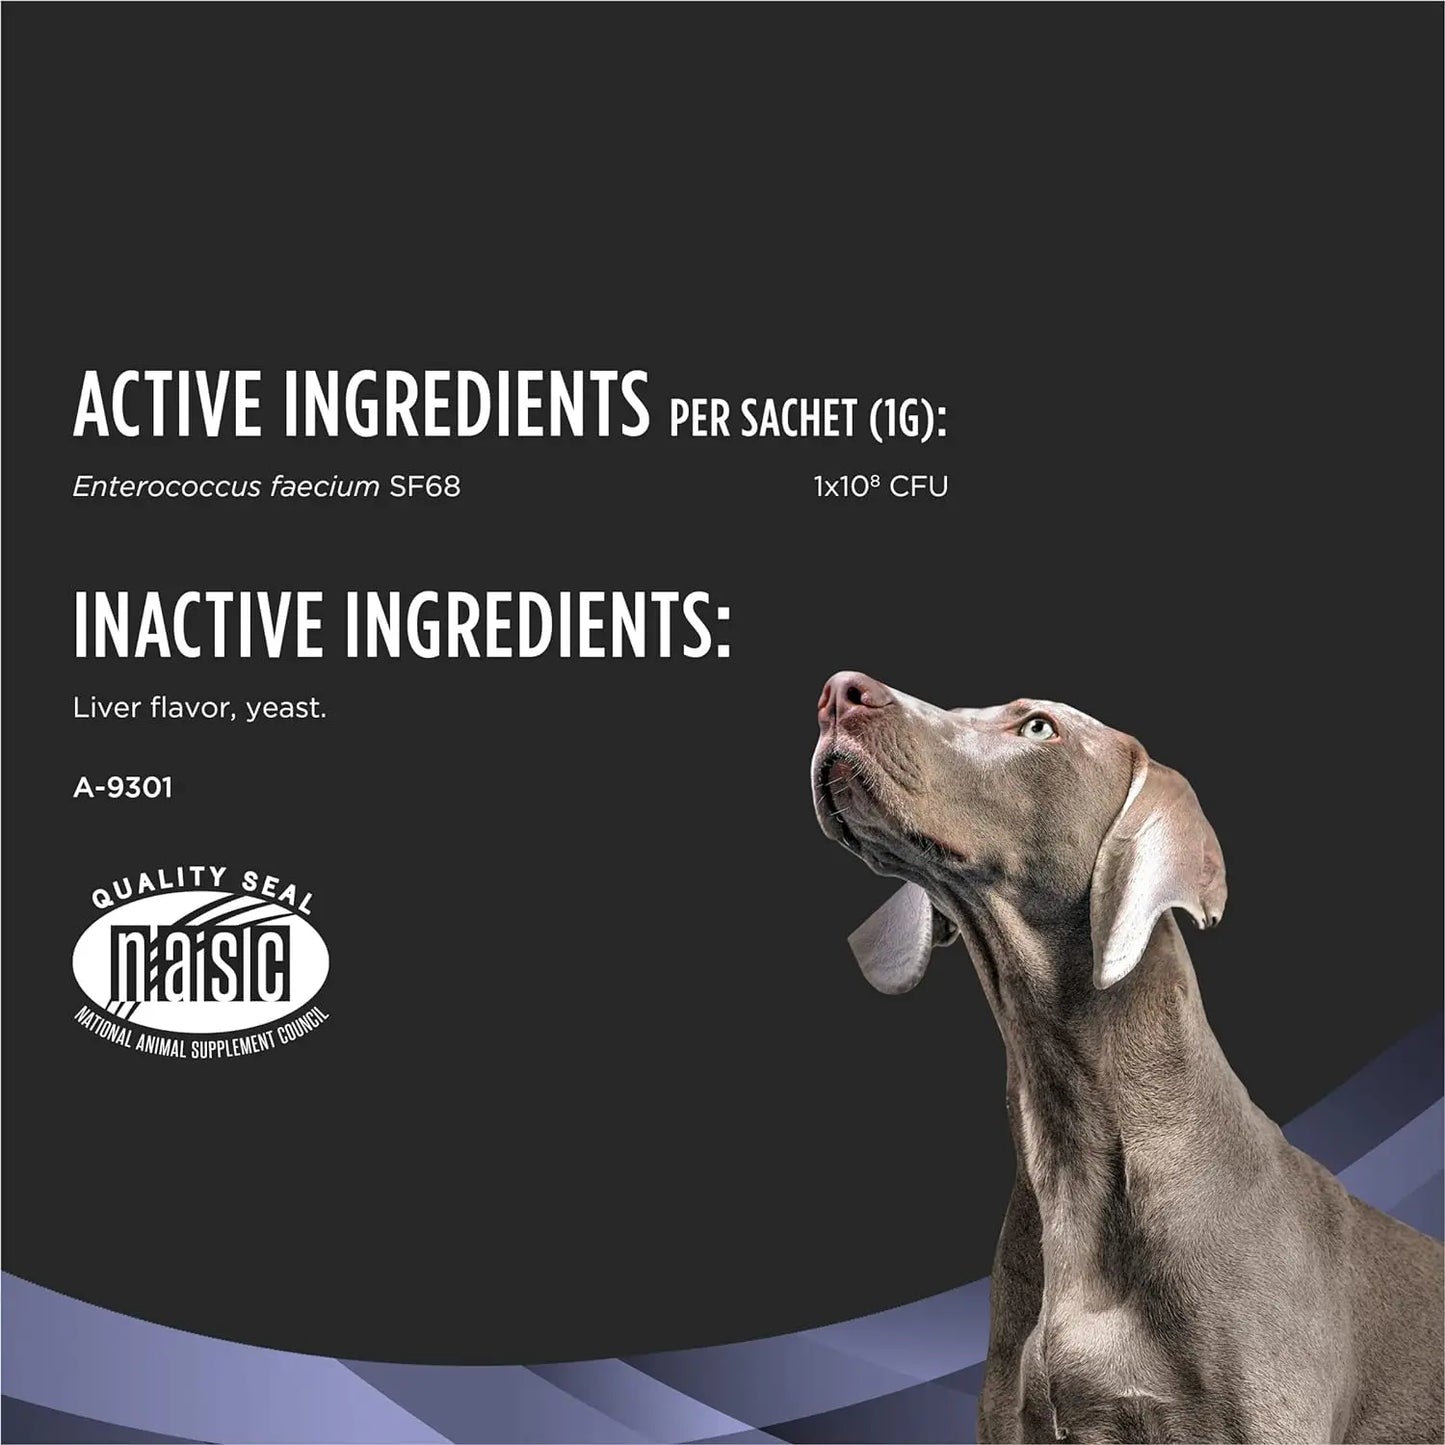 Purina Pro Plan Veterinary Supplements FortiFlora Dog Probiotic Supplement